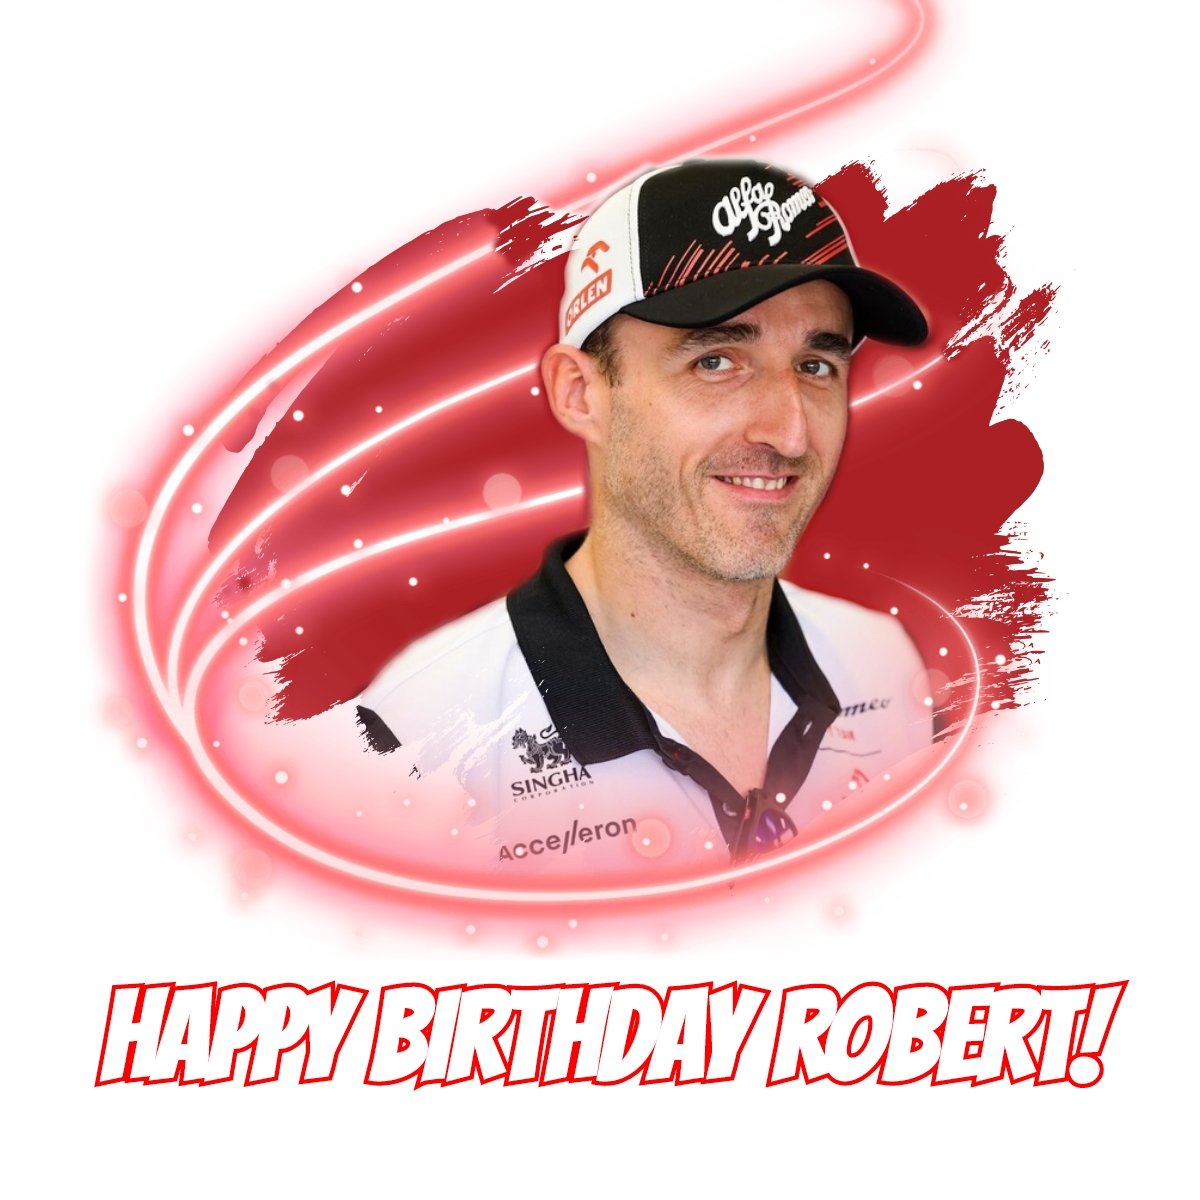 HAPPY BIRTHDAY ROBERT!! 